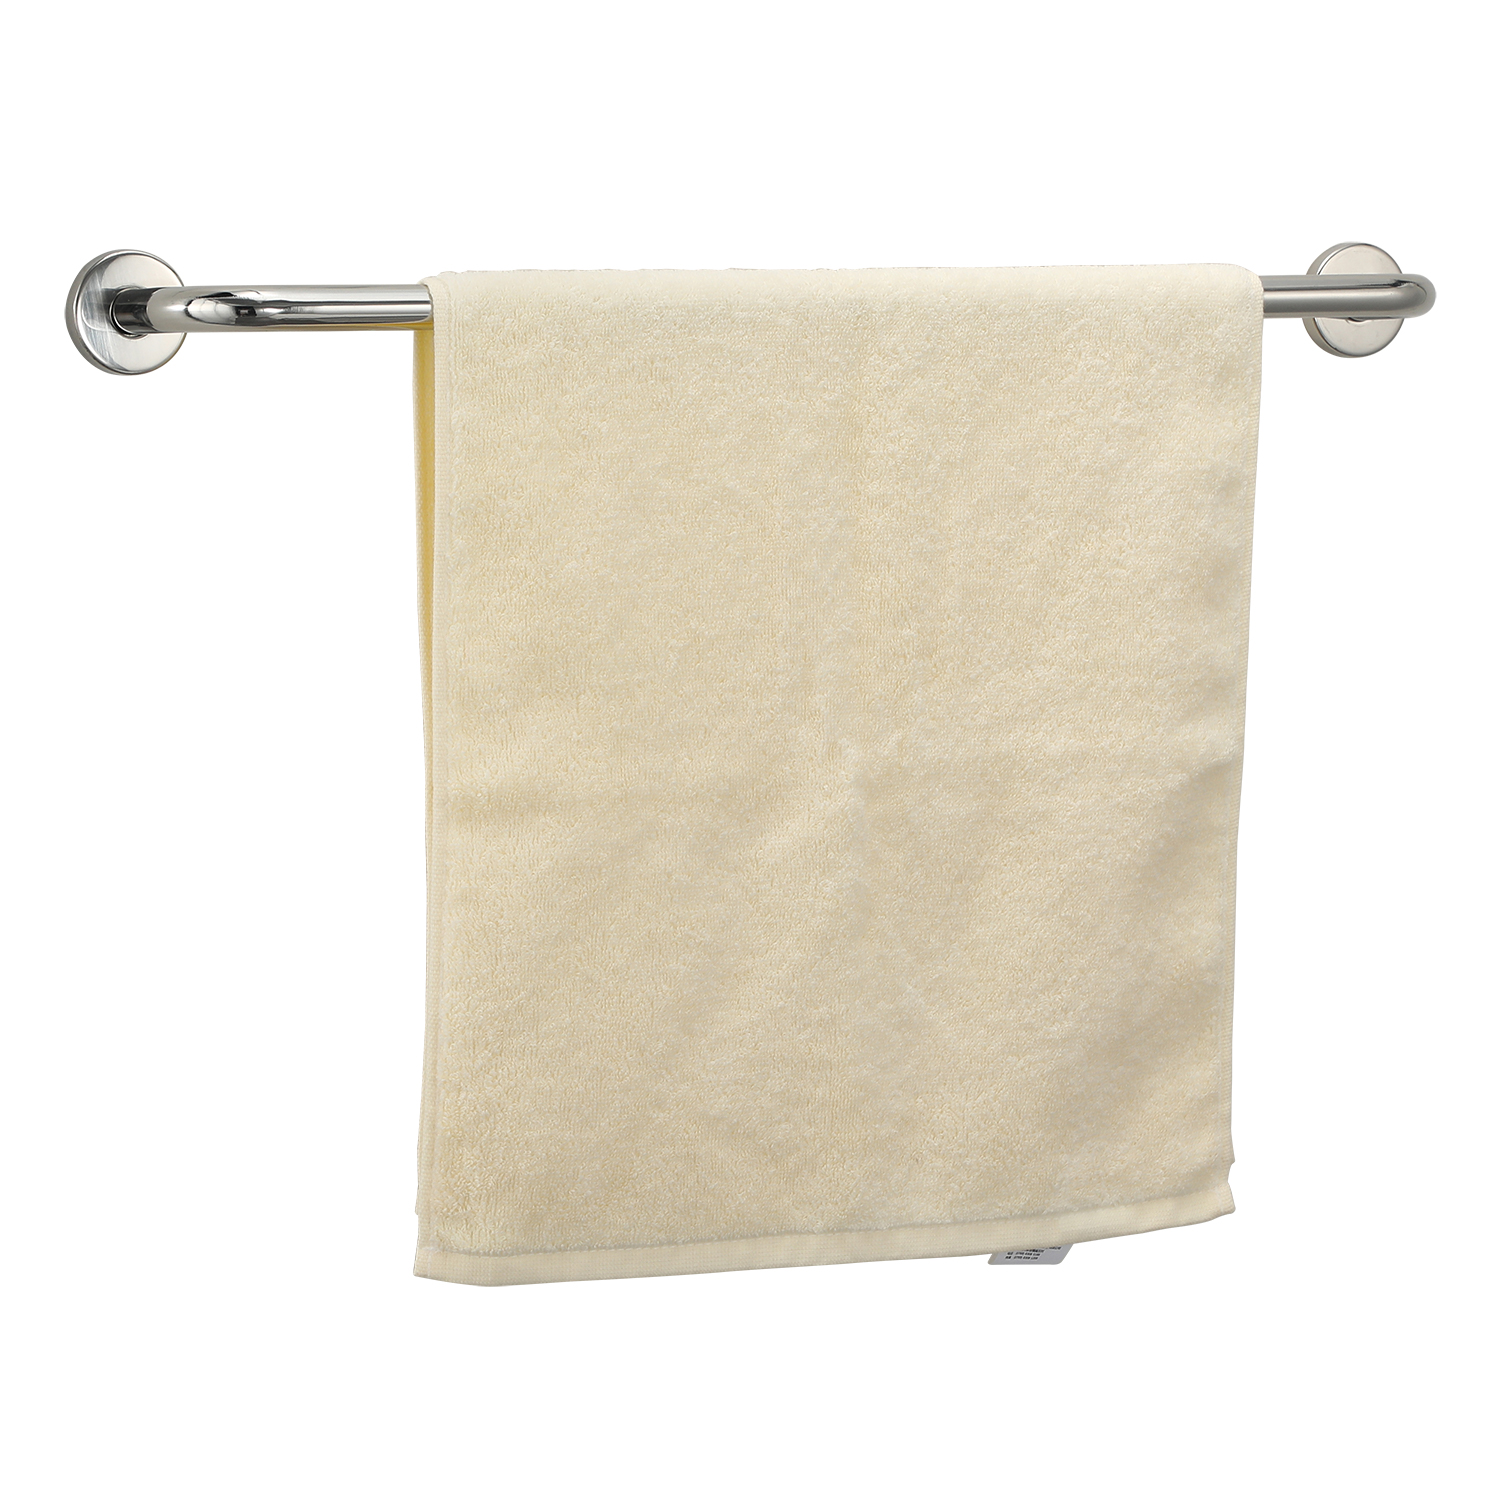 Stainless Steel Wall Mount Towel Rack